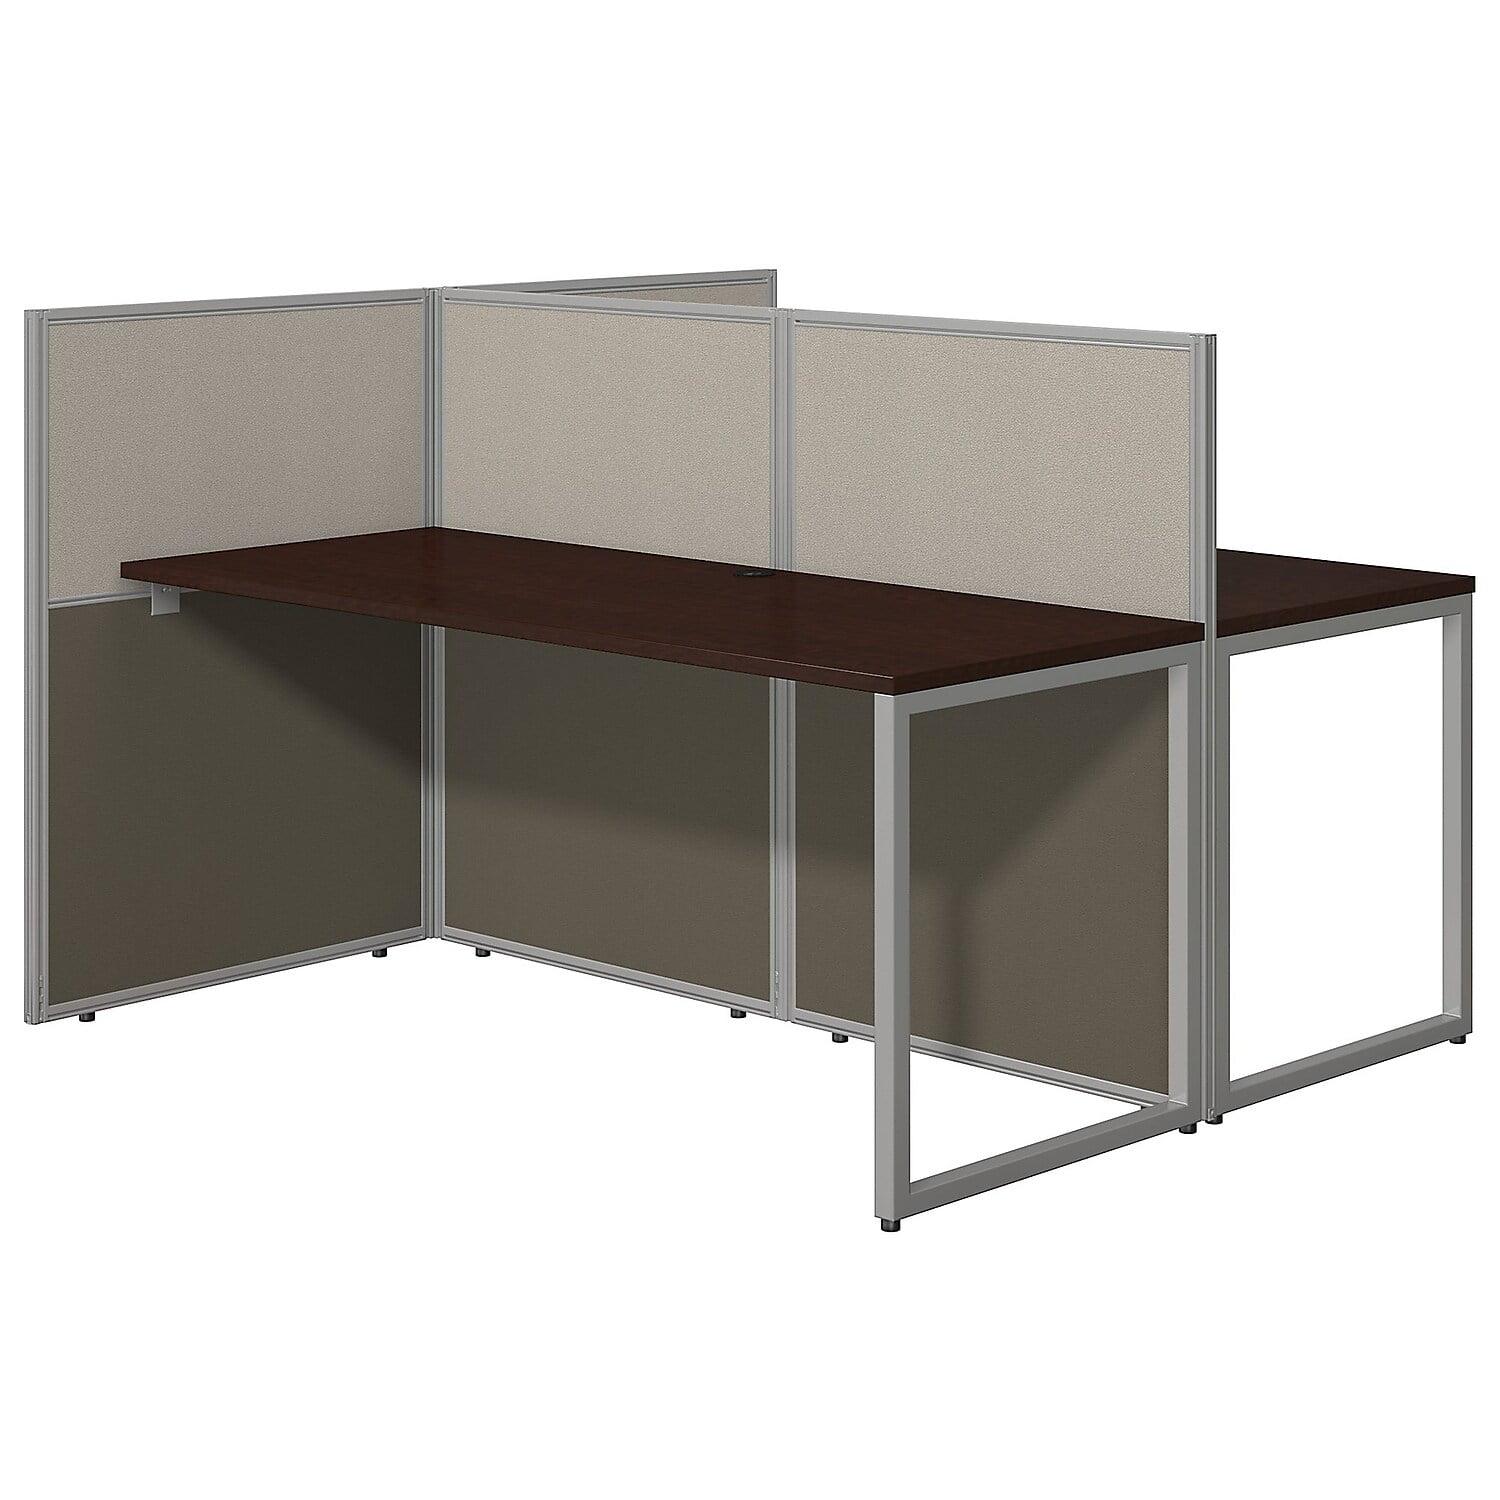 Mocha Cherry Dual Workstation Desk with Gray Fabric Panels